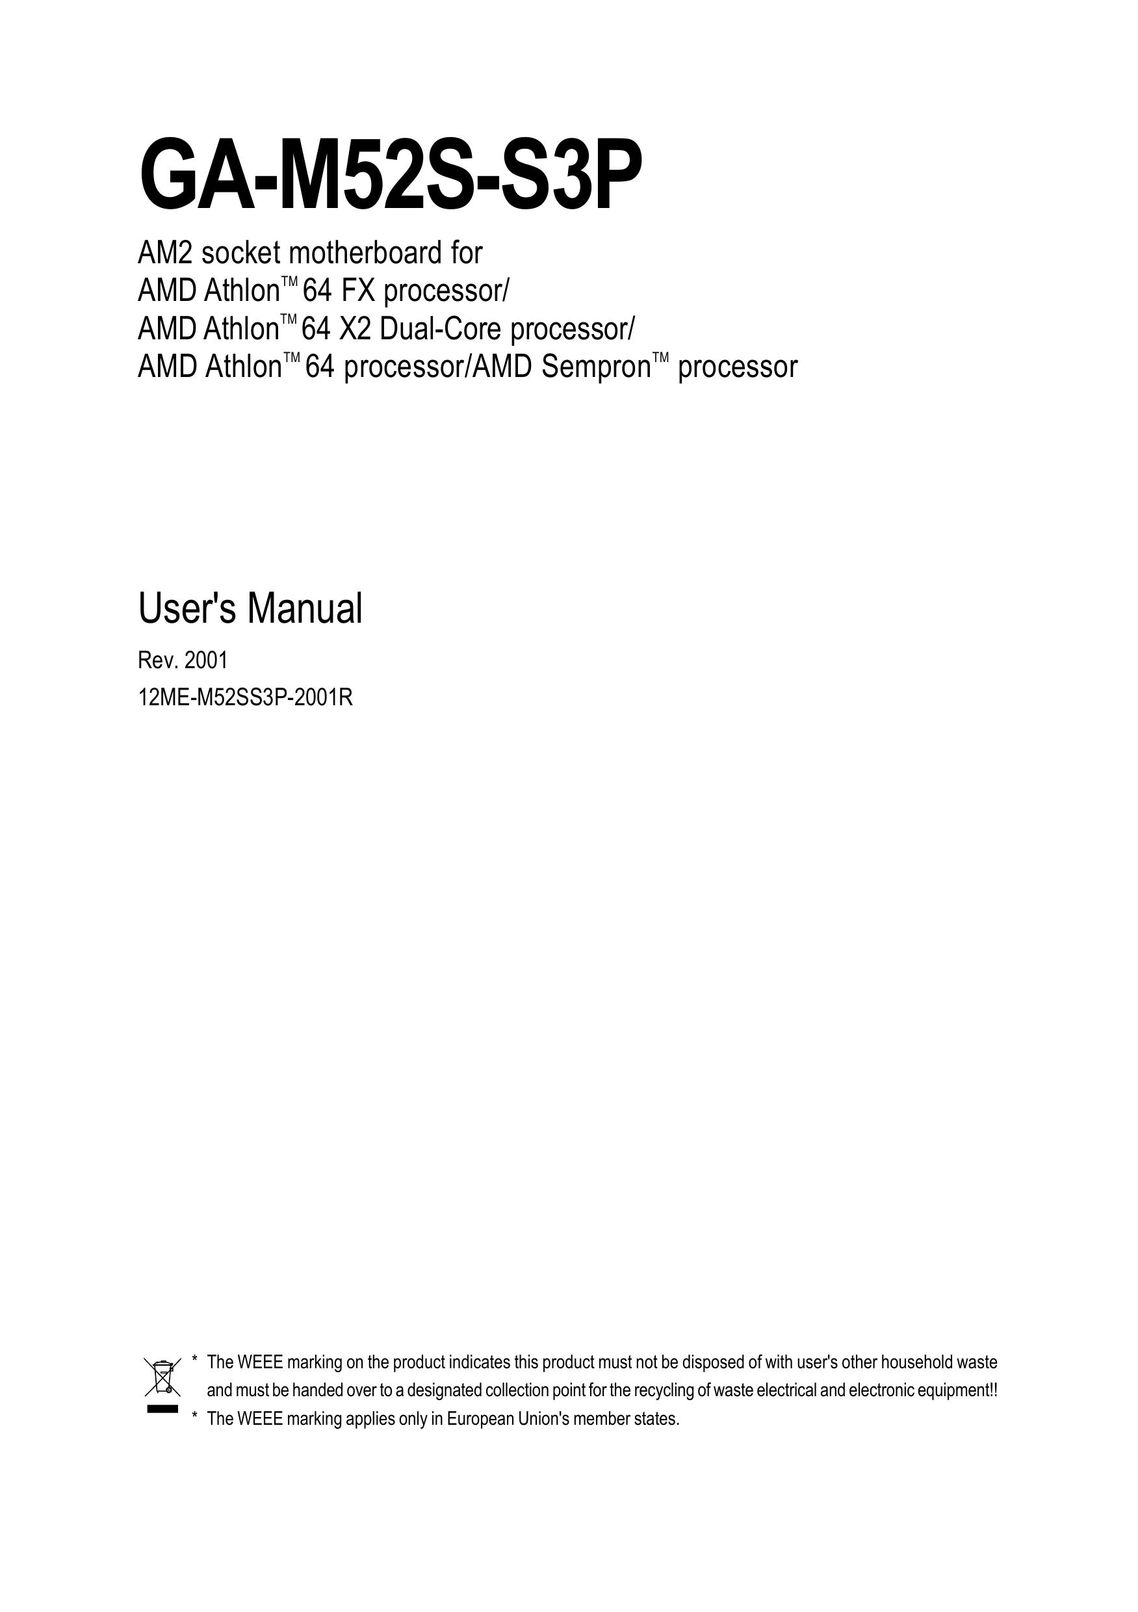 Gigabyte GA-M52S-S3P Computer Hardware User Manual